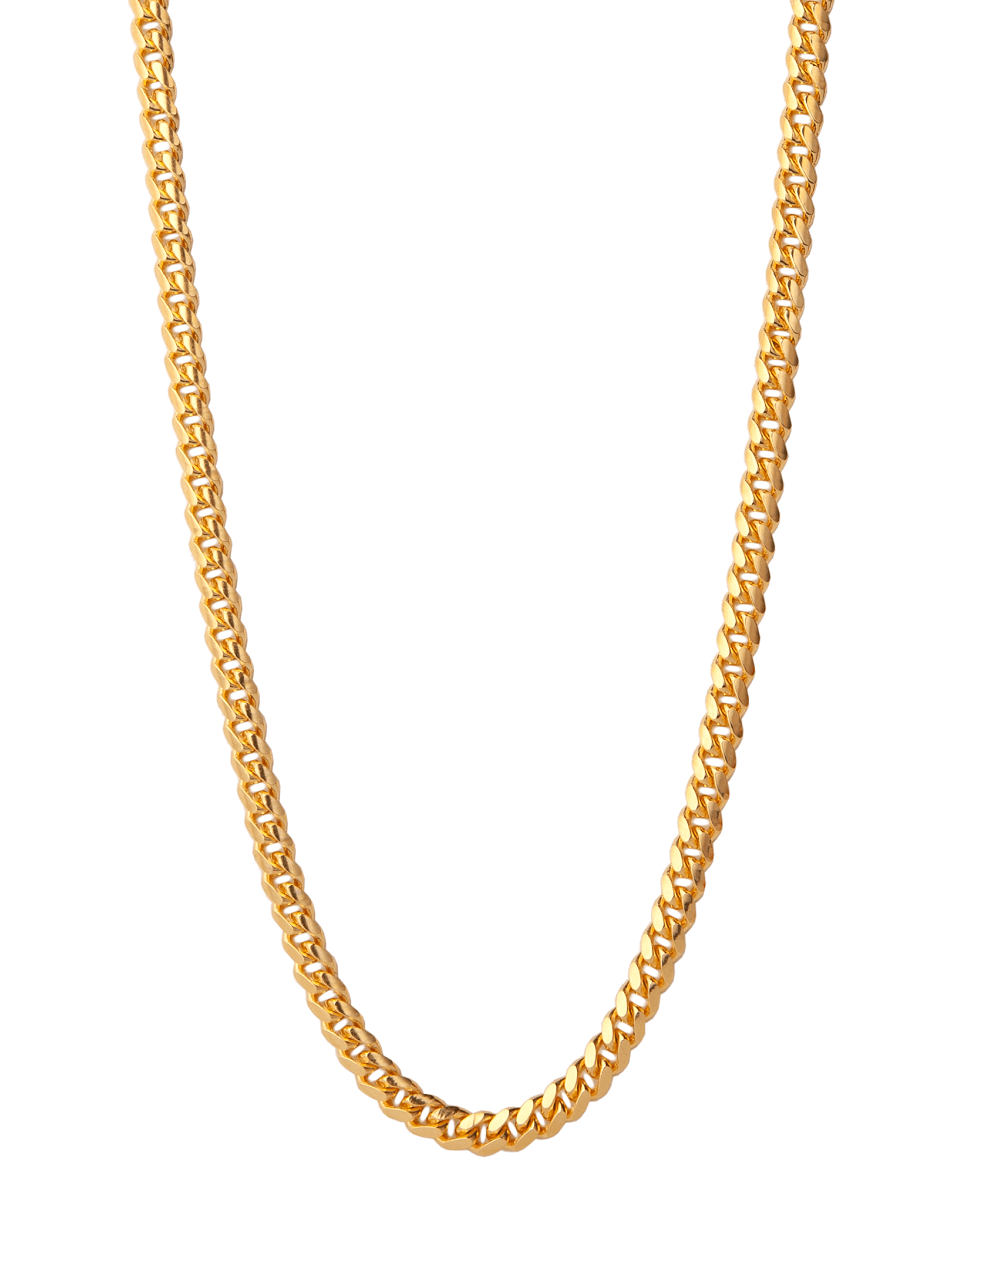 5 mm Cuban link chain - gold